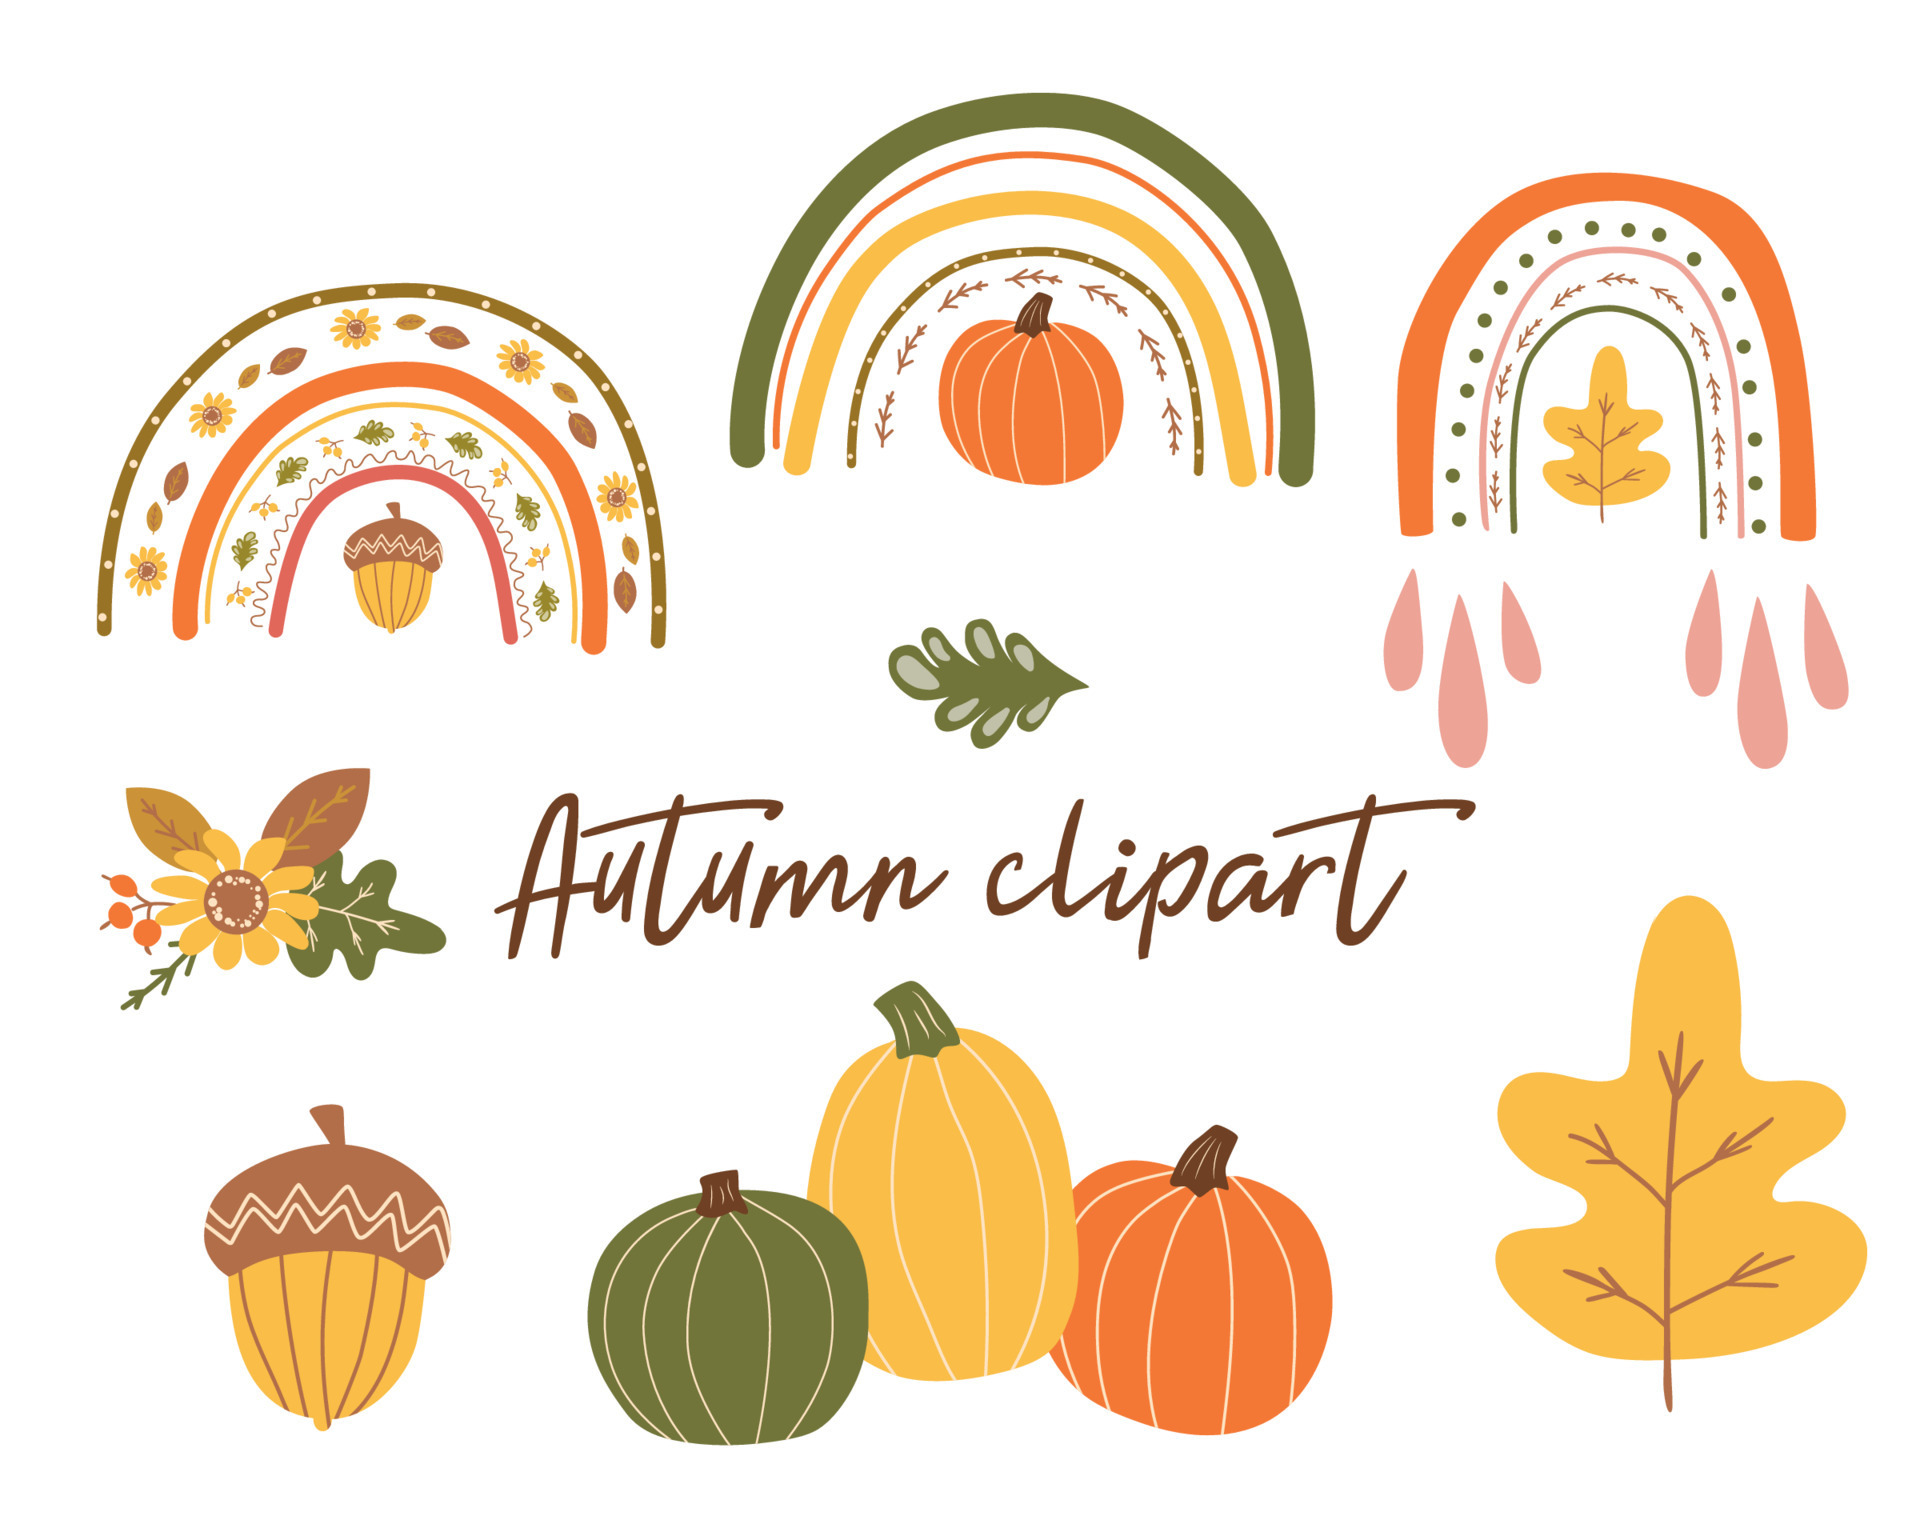 https://static.vecteezy.com/system/resources/previews/013/048/788/original/autumn-clipart-autumn-rainbow-cute-fall-pumpkin-leaves-fall-flower-acorn-autumn-trendy-set-fall-graphic-elements-collection-hand-drawn-kids-orange-pumpkin-rainbow-illustration-vector.jpg